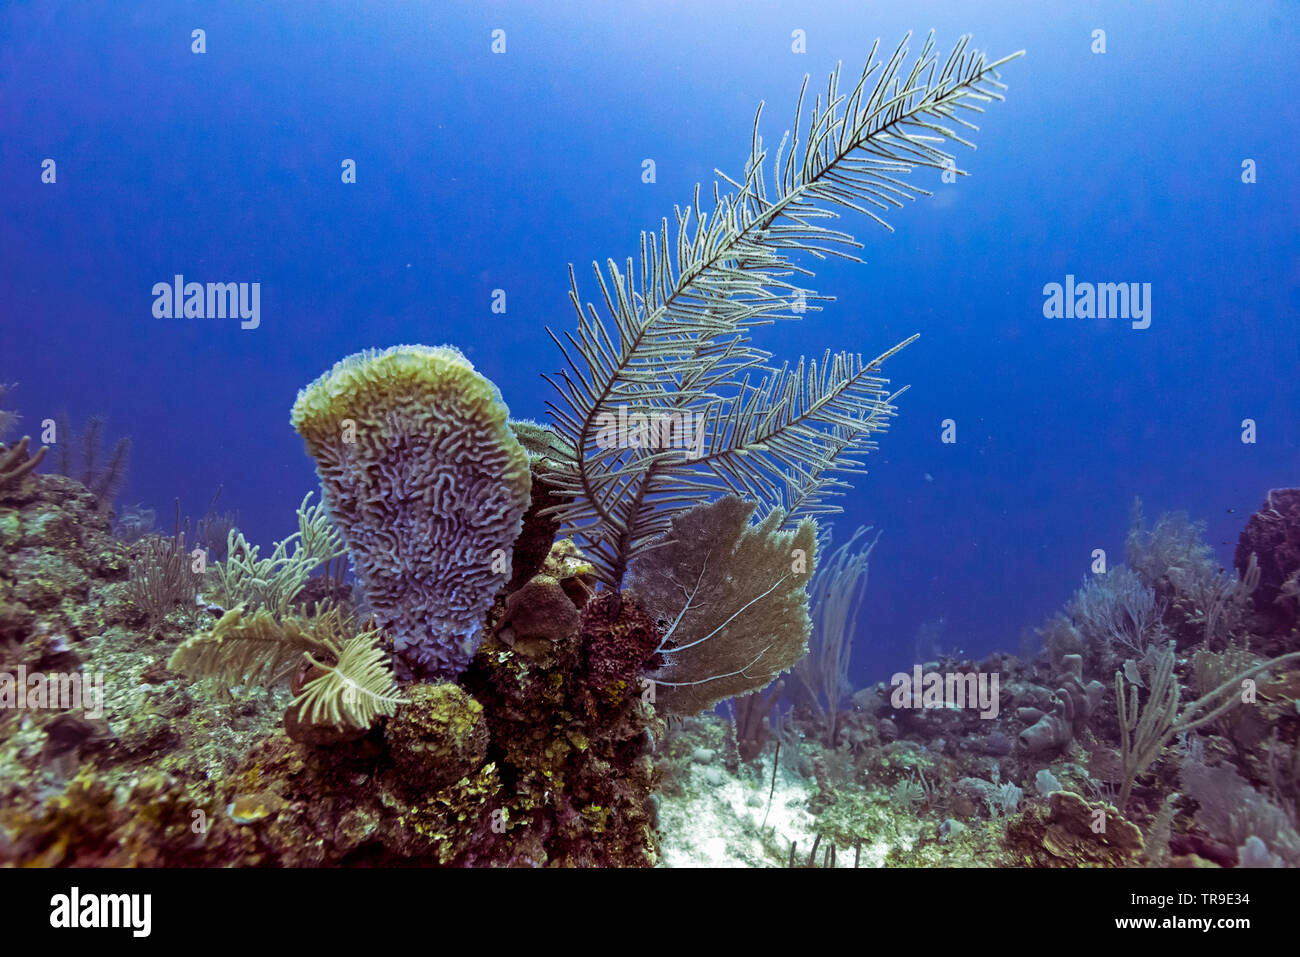 Coral reefs underwater, Belize Barrier Reef, Belize Stock Photo